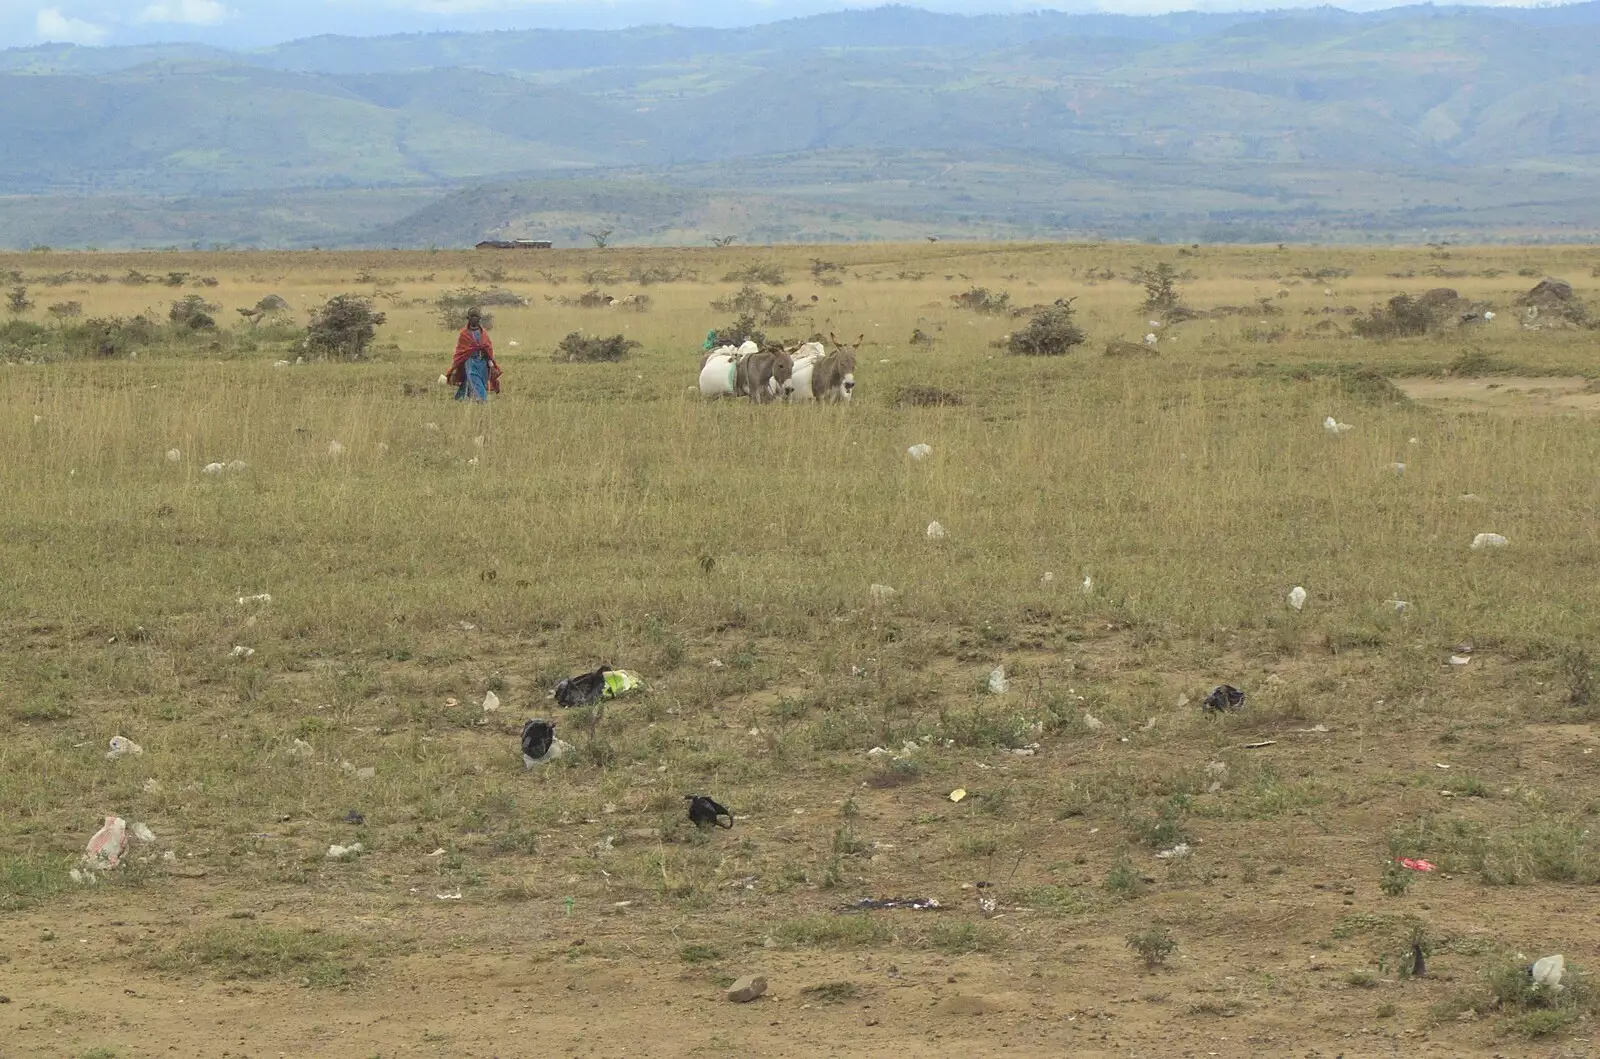 Donkey herding on the plains, from Nairobi and the Road to Maasai Mara, Kenya, Africa - 1st November 2010